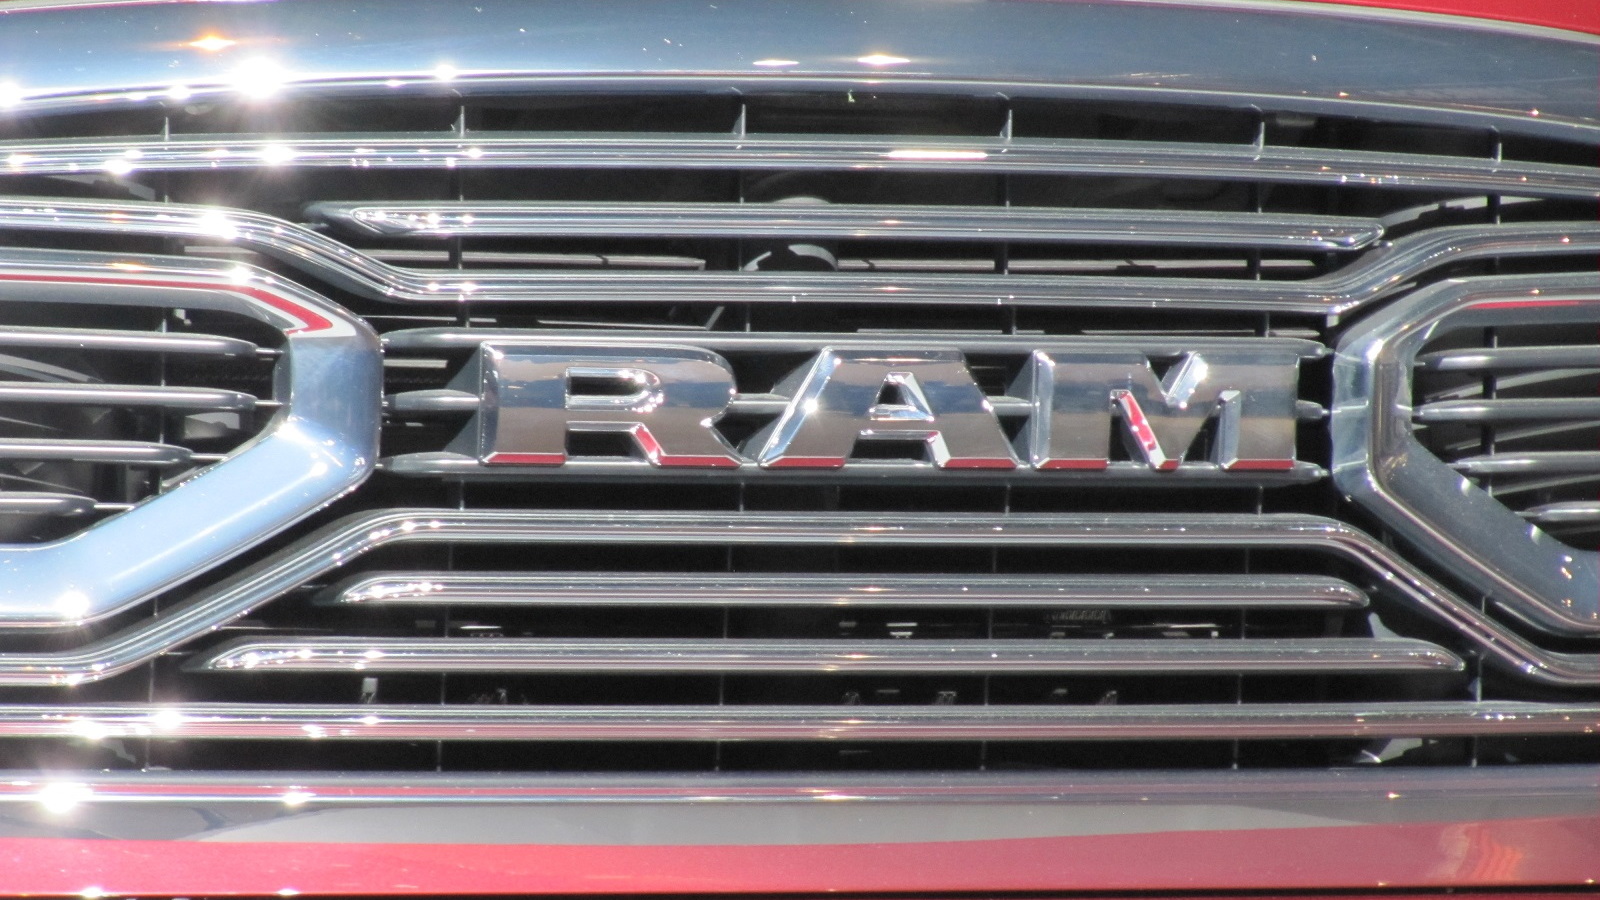 2016 Ram 1500 Laramie Limited, 2015 Chicago Auto Show